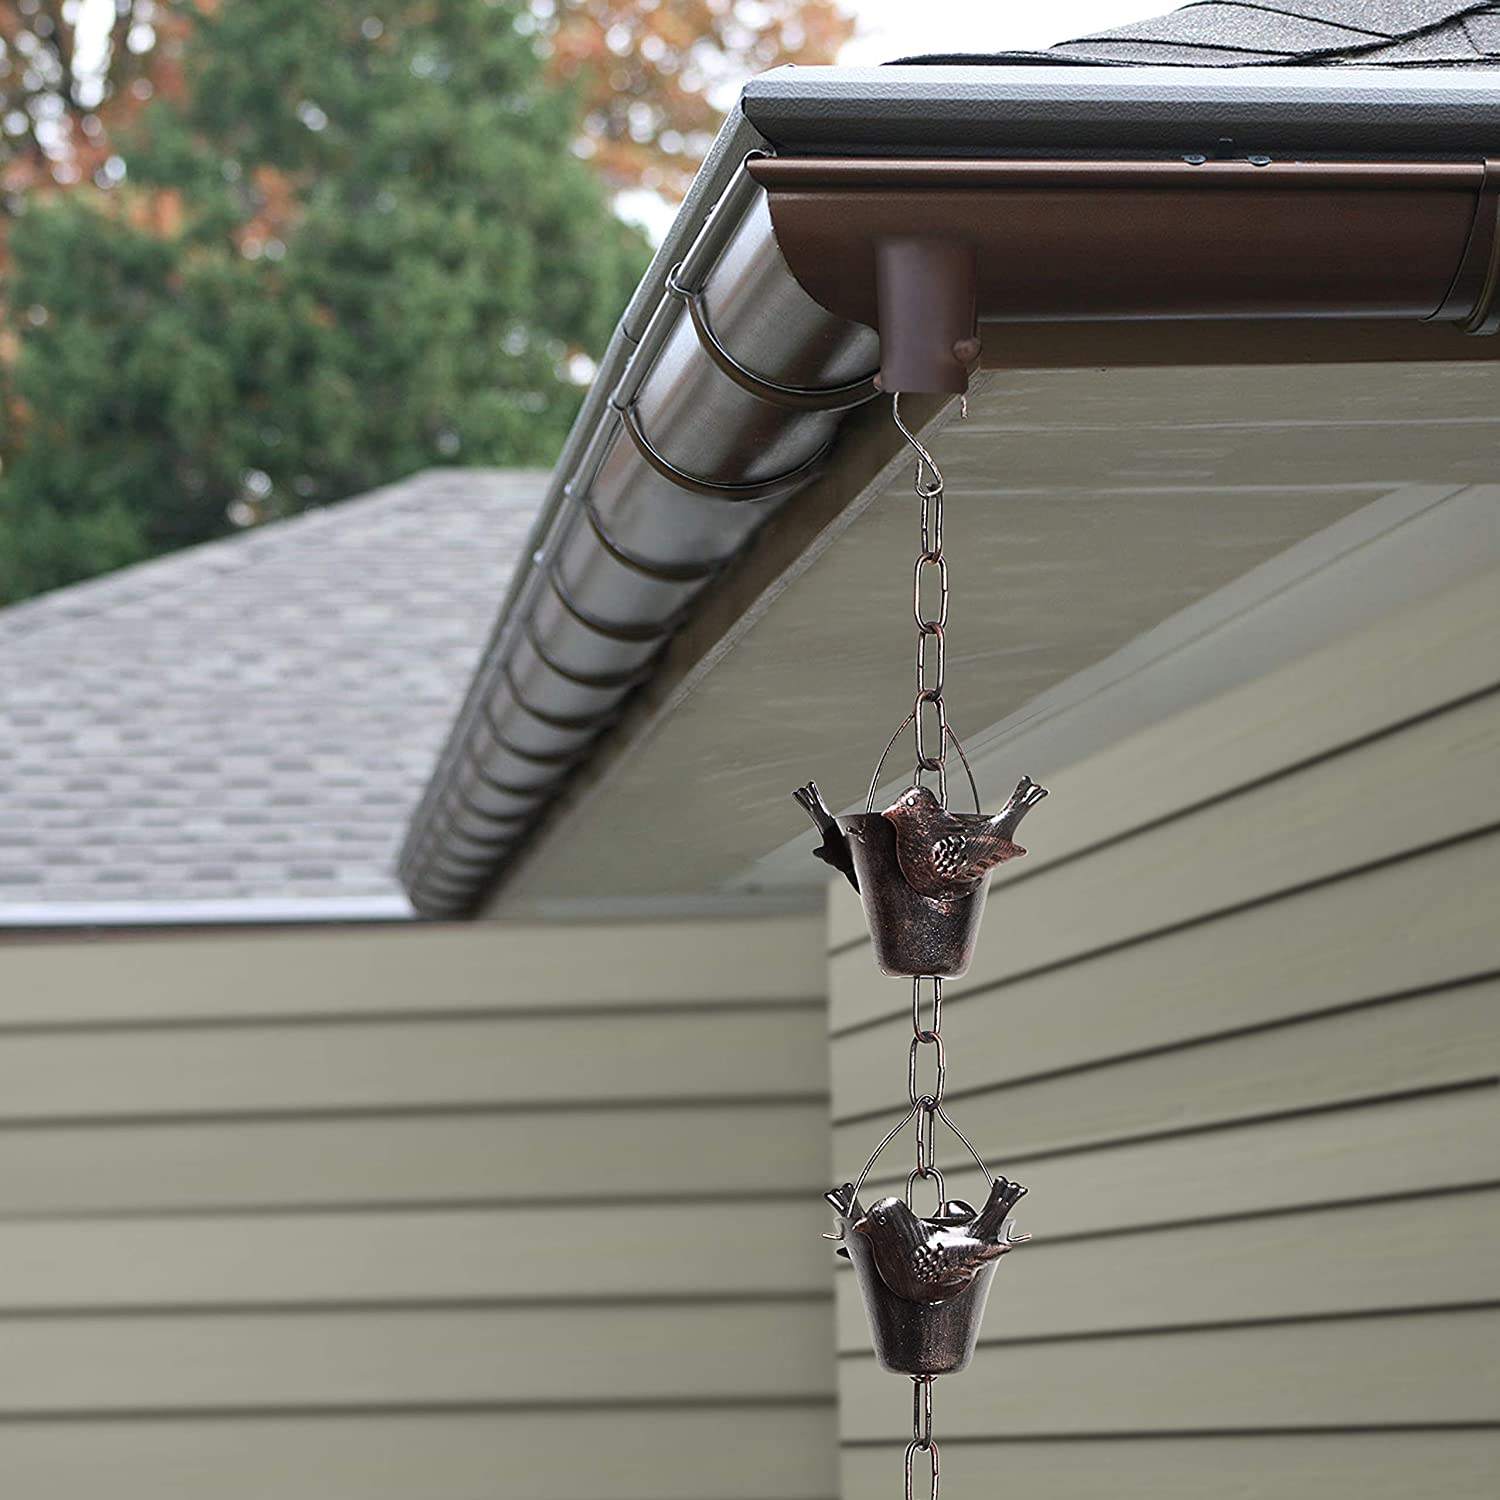 Roof Downspout Rainwater Water Catcher Diverter 2.6M Length Metal Birdie Mug Gutter Rain Chain For Garden Decoration